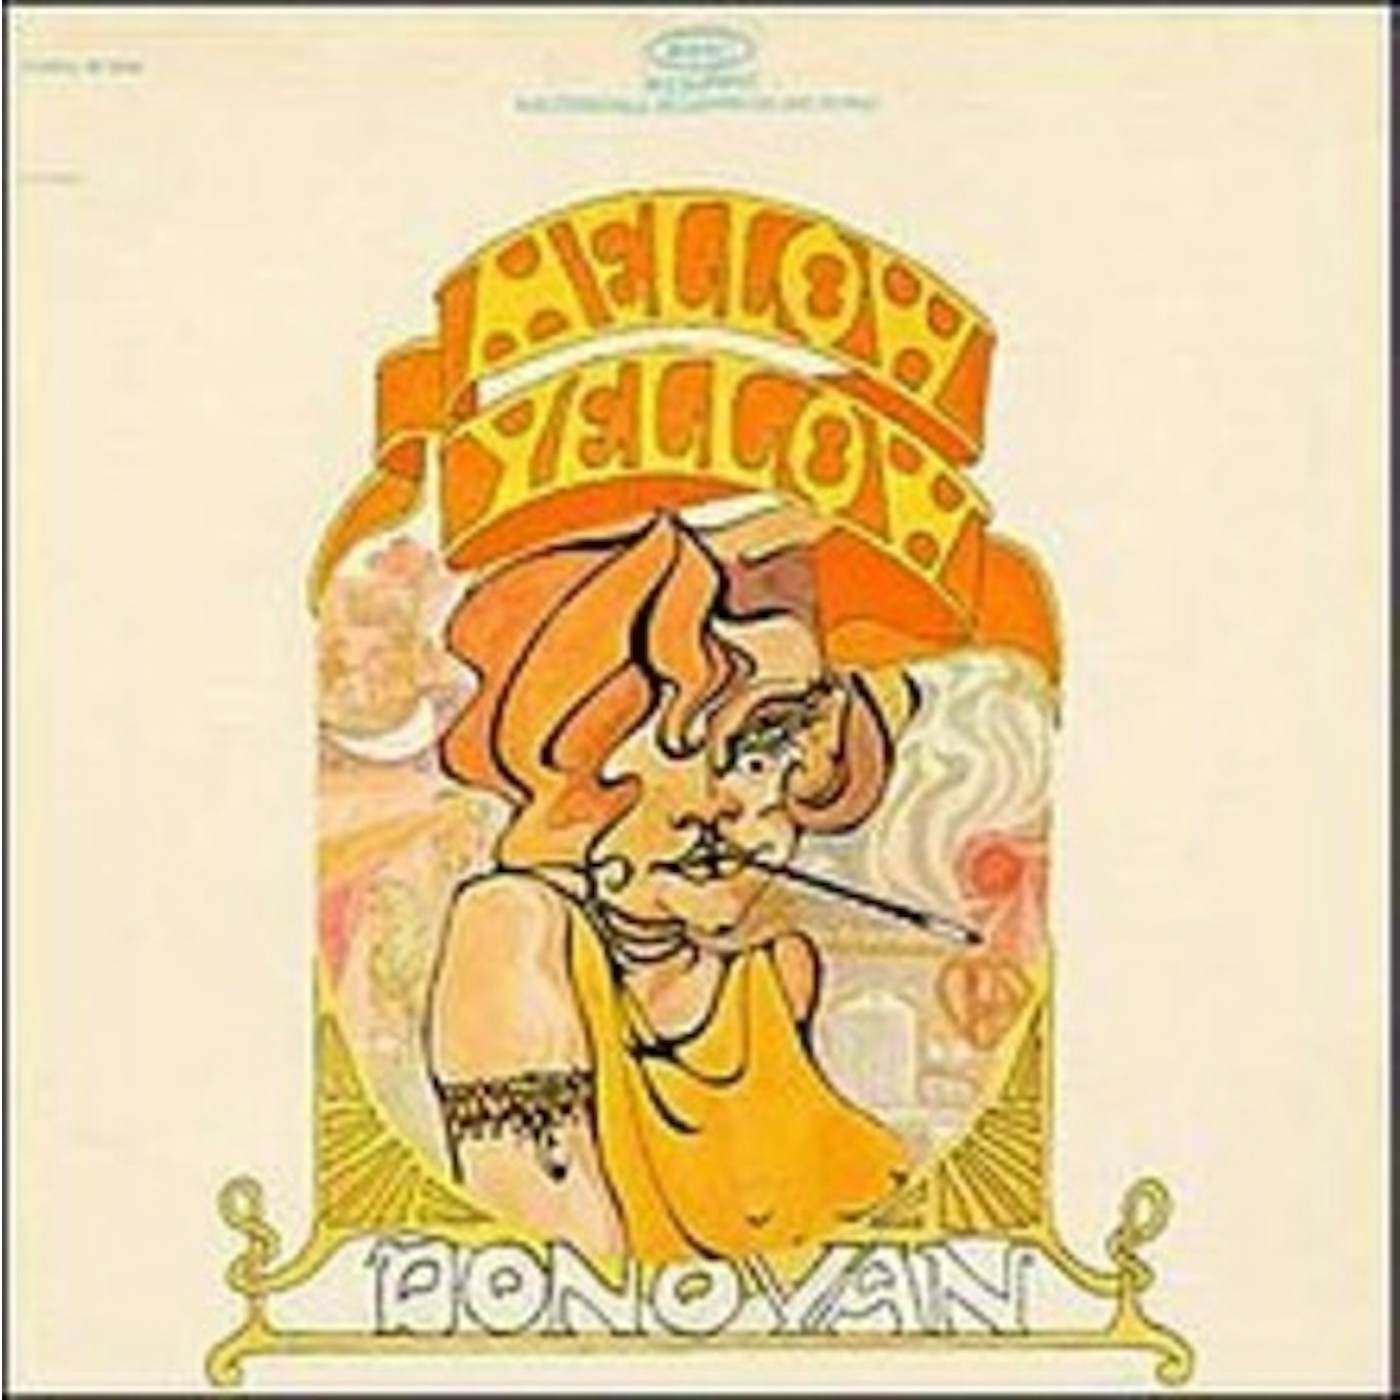 Donovan Mellow Yellow Vinyl Record